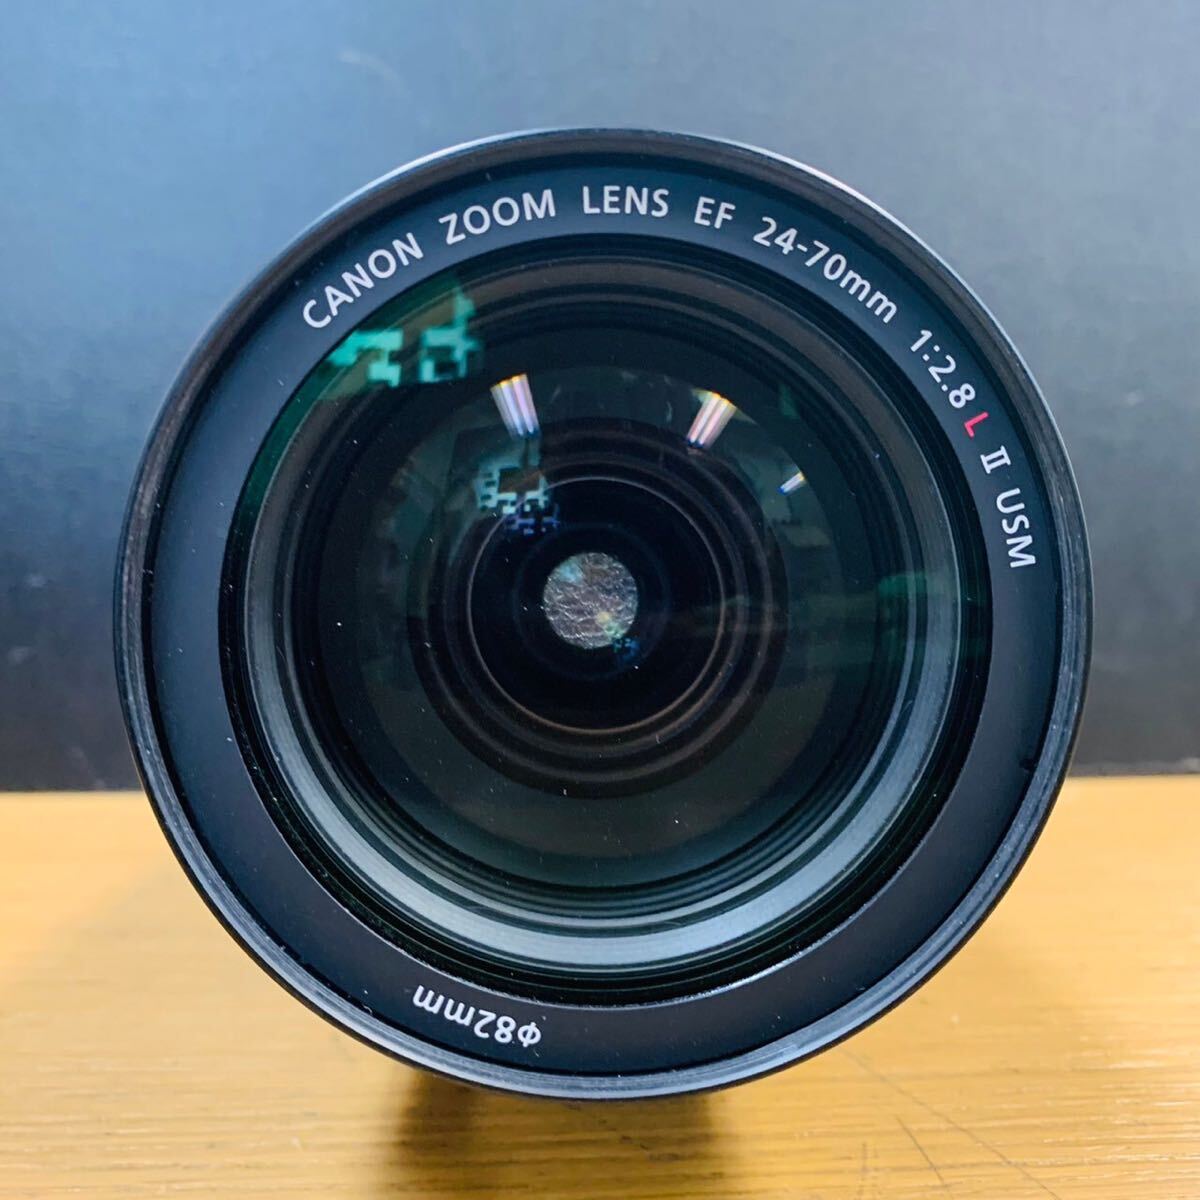 Canon ZOOM LENS EF 24-70mm 1:2.8 L II USM フード付属 NN9990_画像2